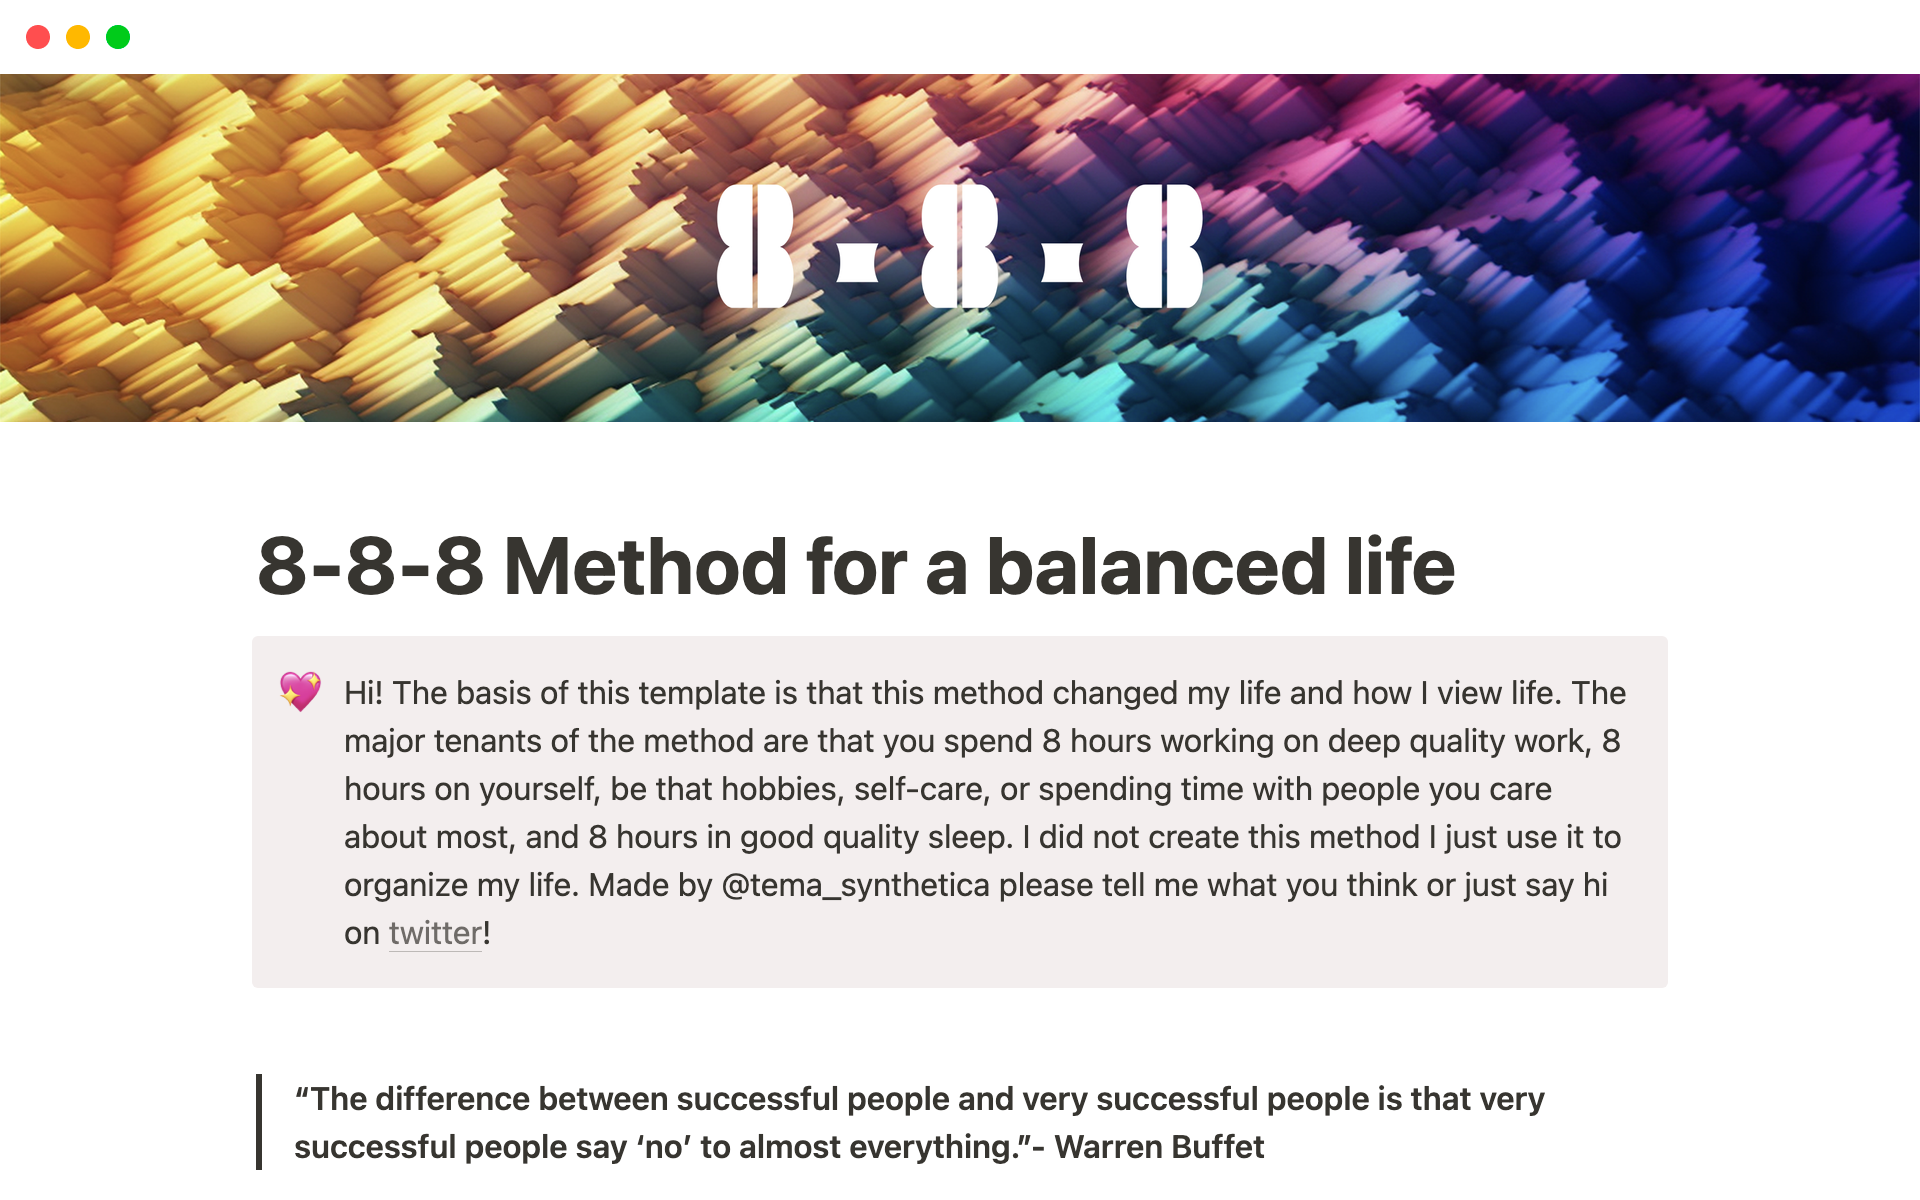 Uses the 8-8-8 method to organize life